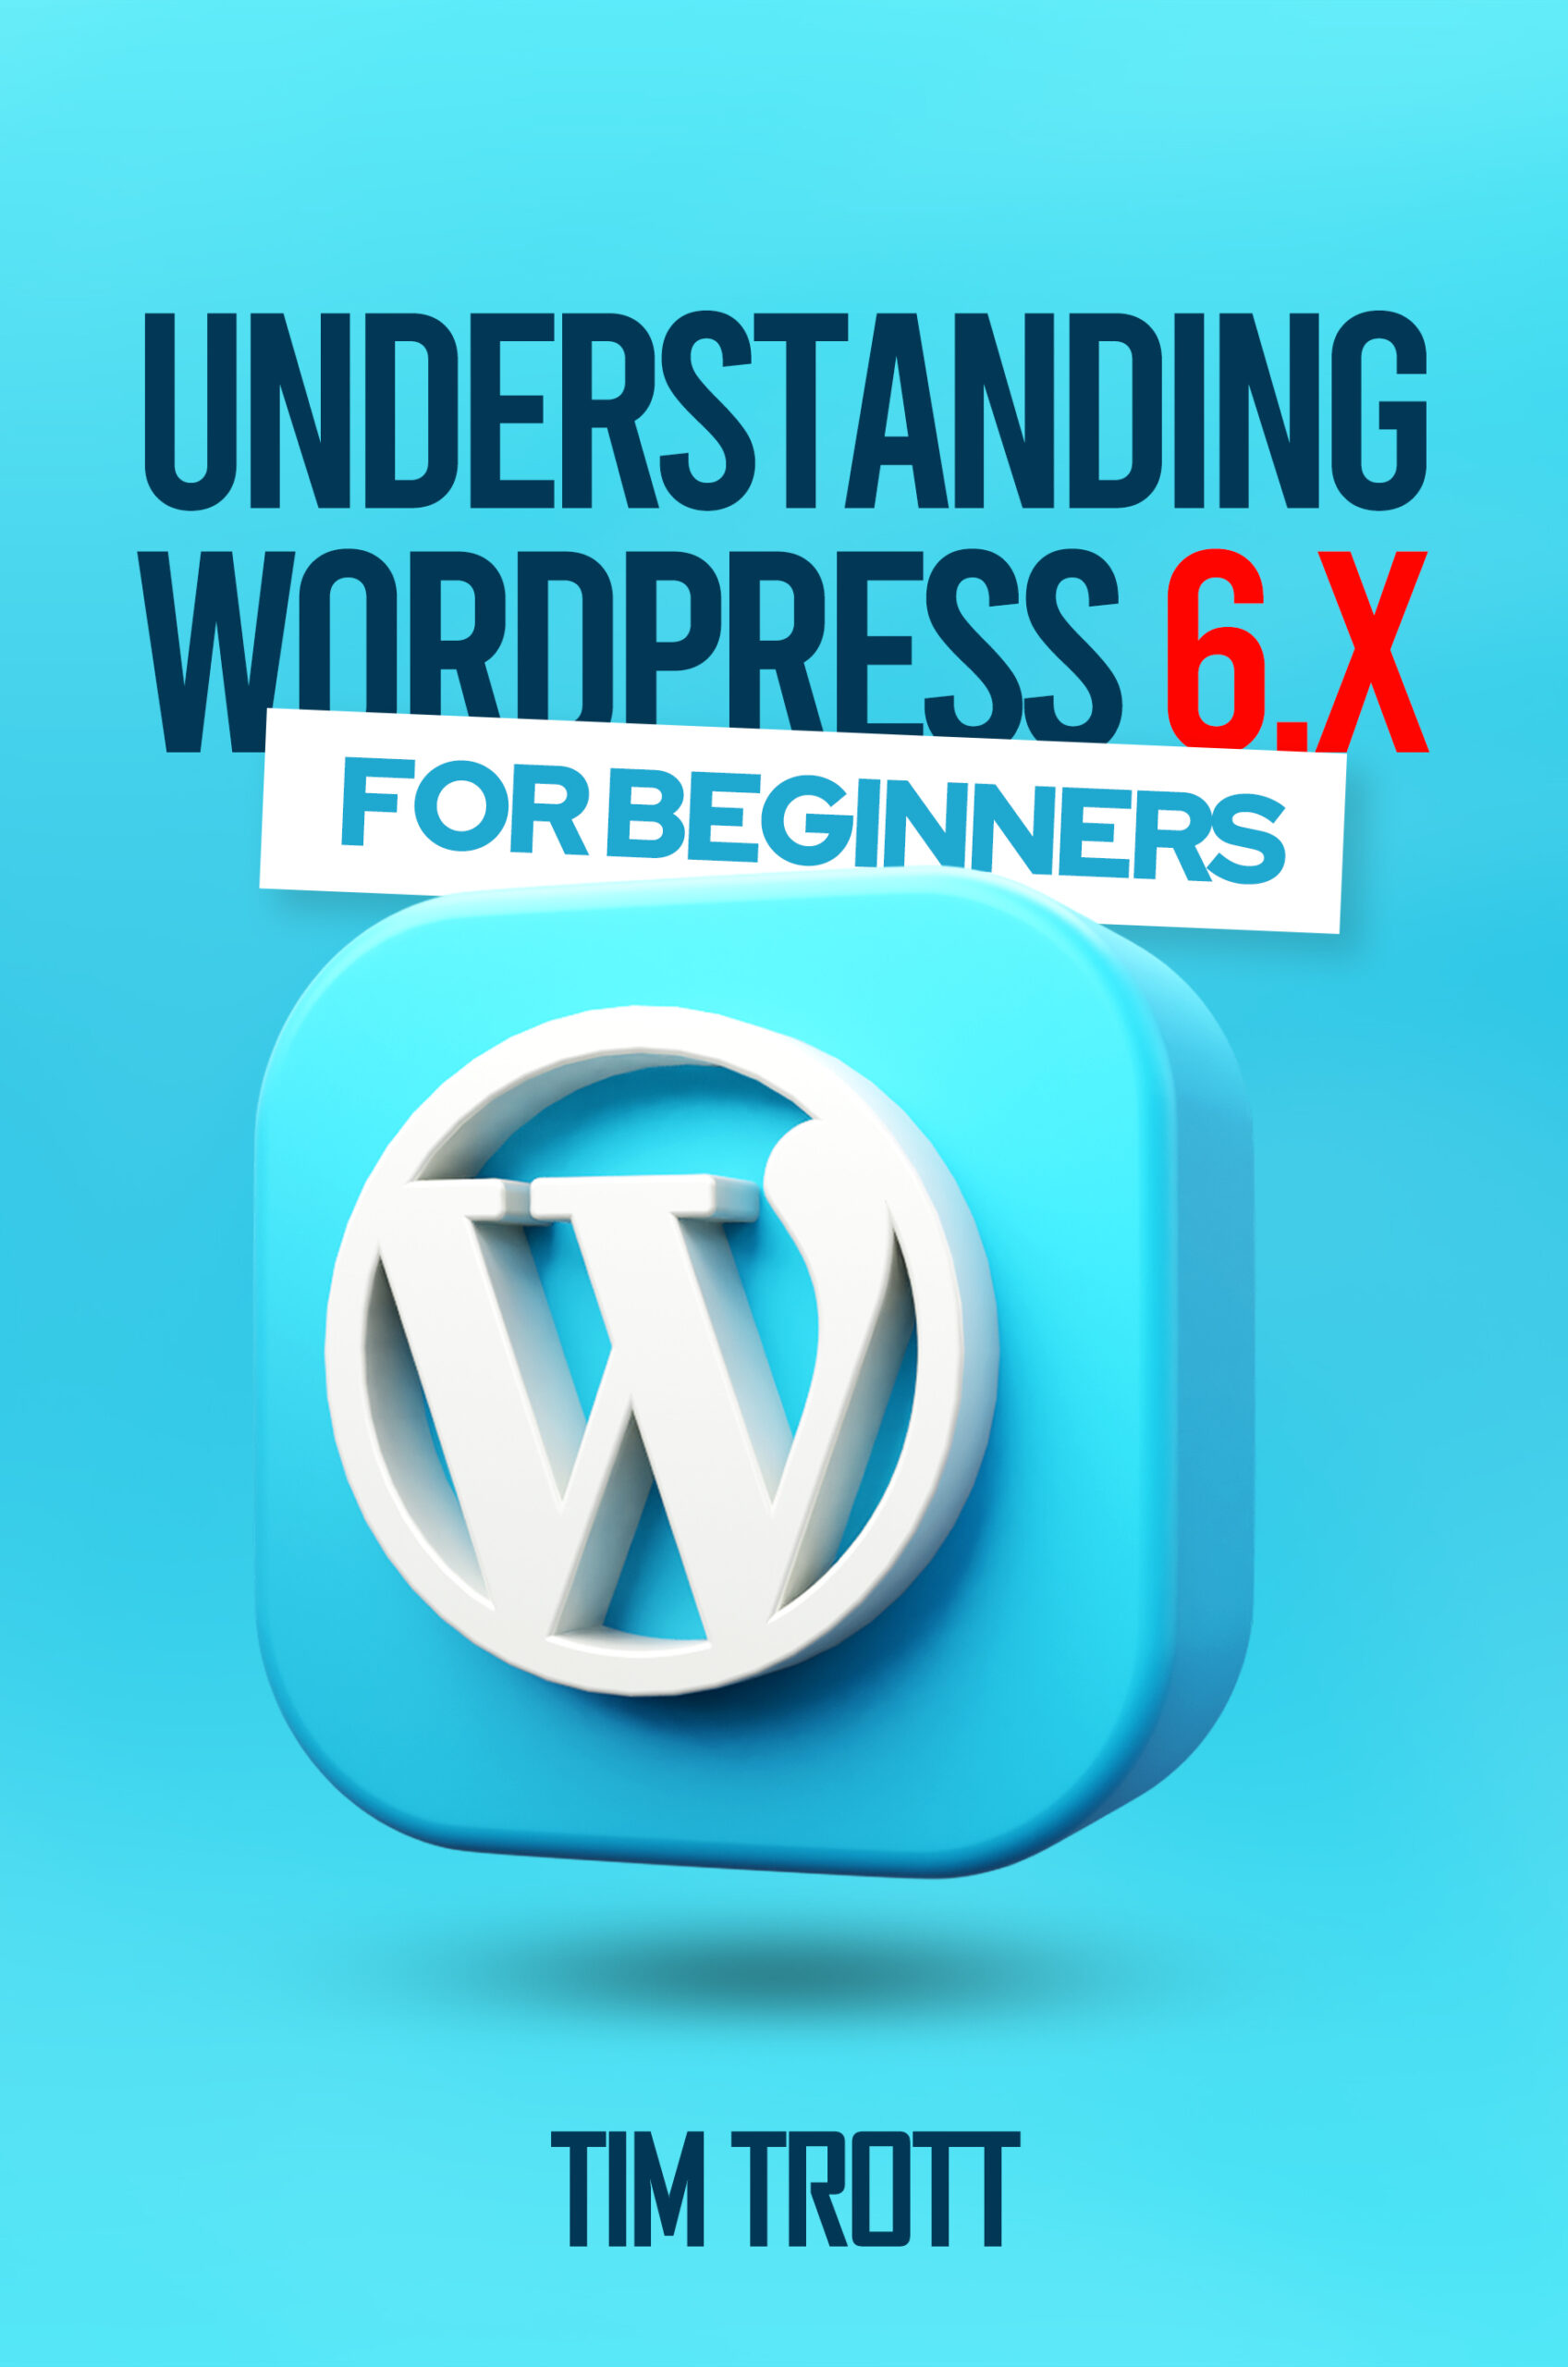 Understanding WordPress 6.x for Beginners by Tim Trott